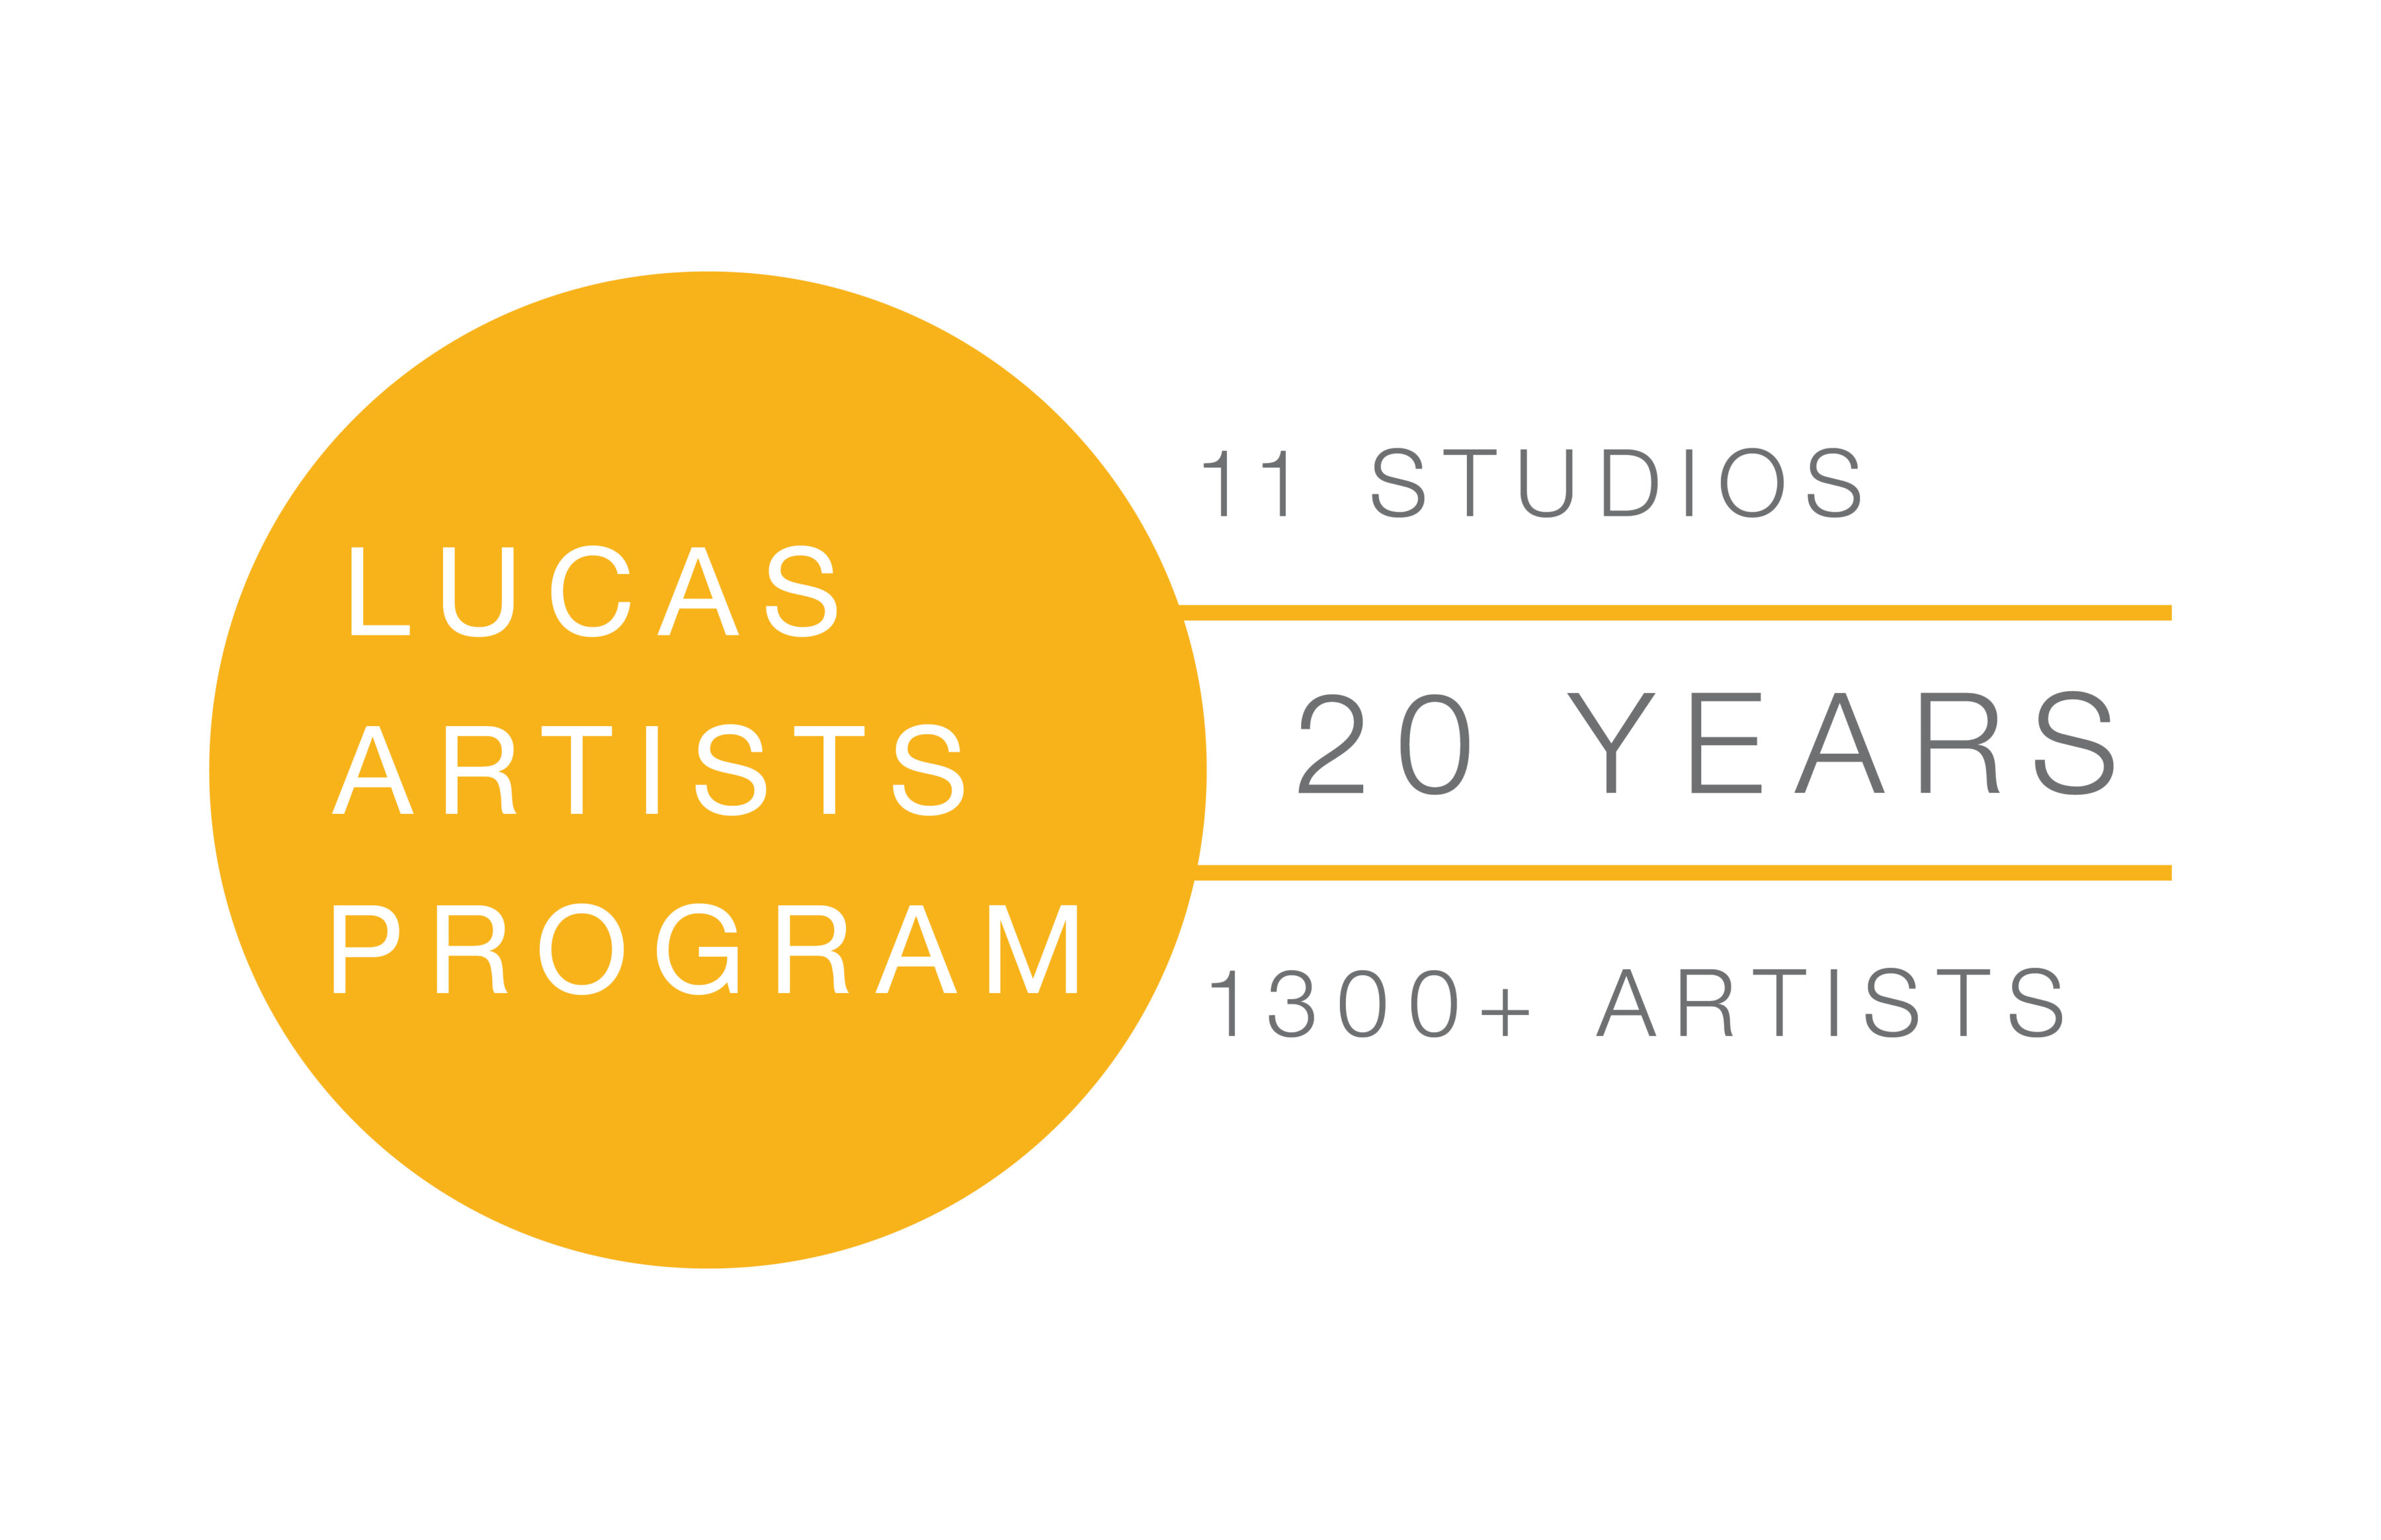 Lucas Artists Program: 11 Studios, 20 Years, 1300+ Artists